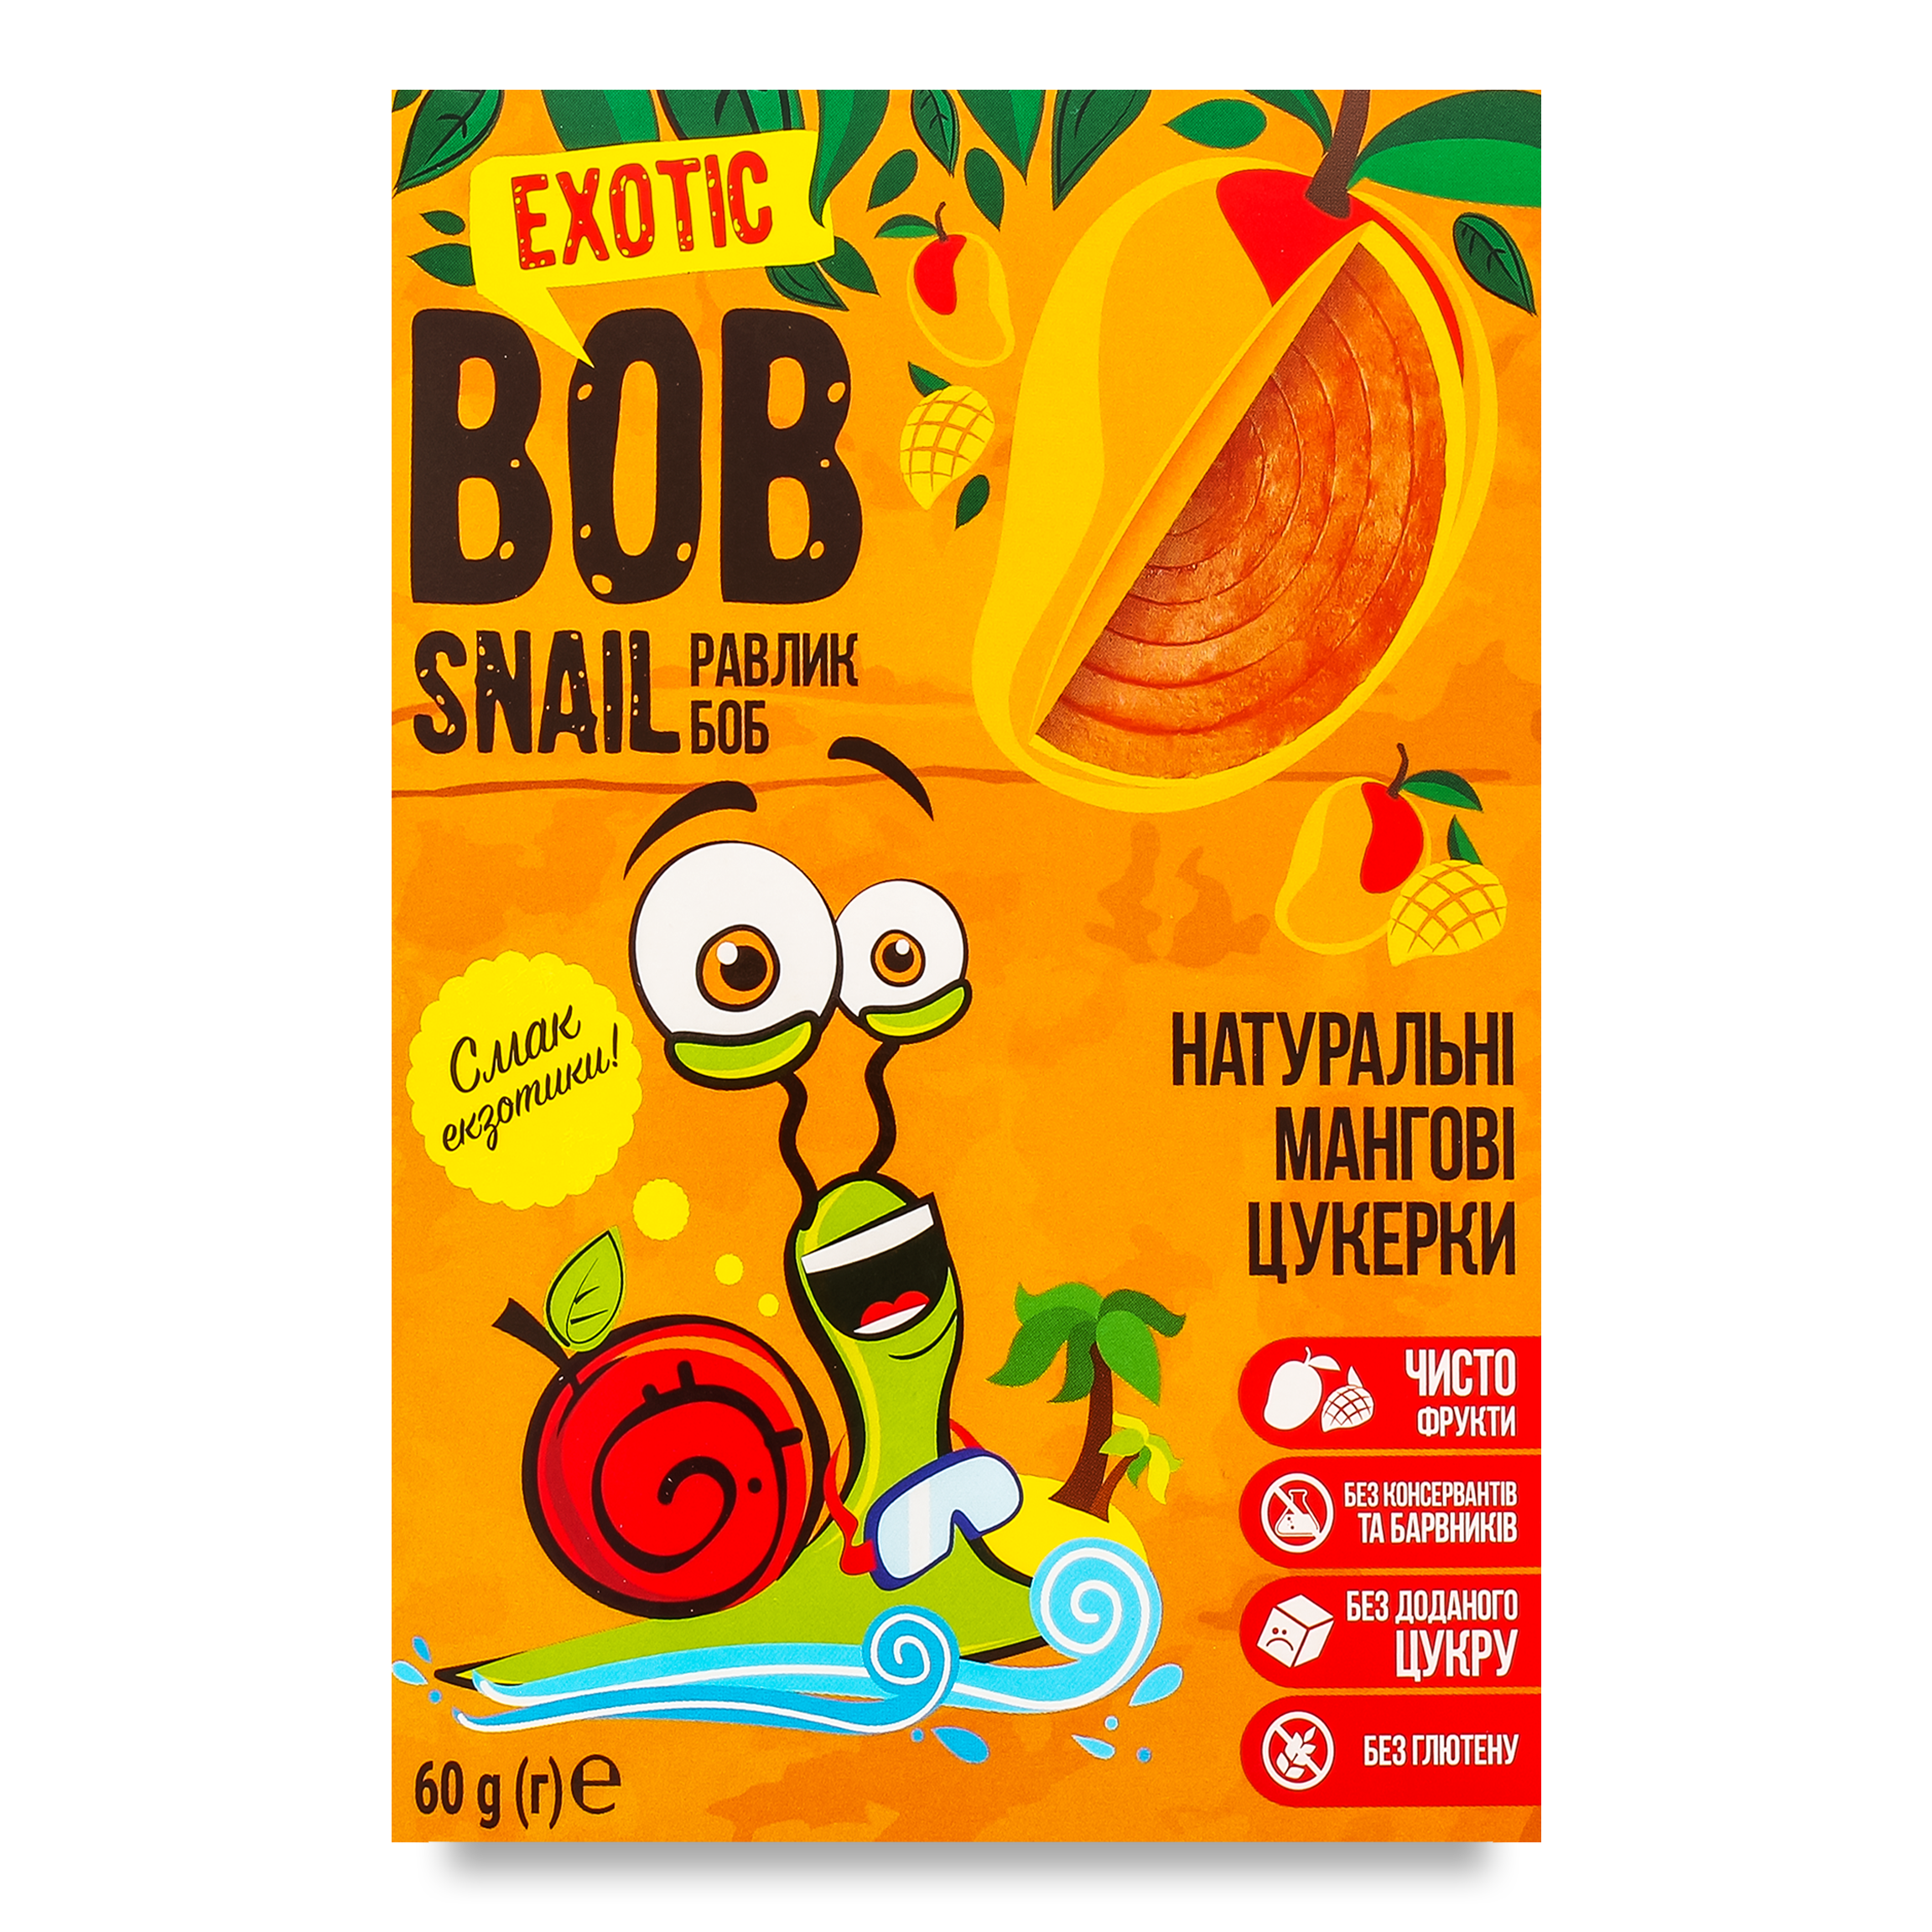 Цукерки Bob Snail натуральні мангові 60г